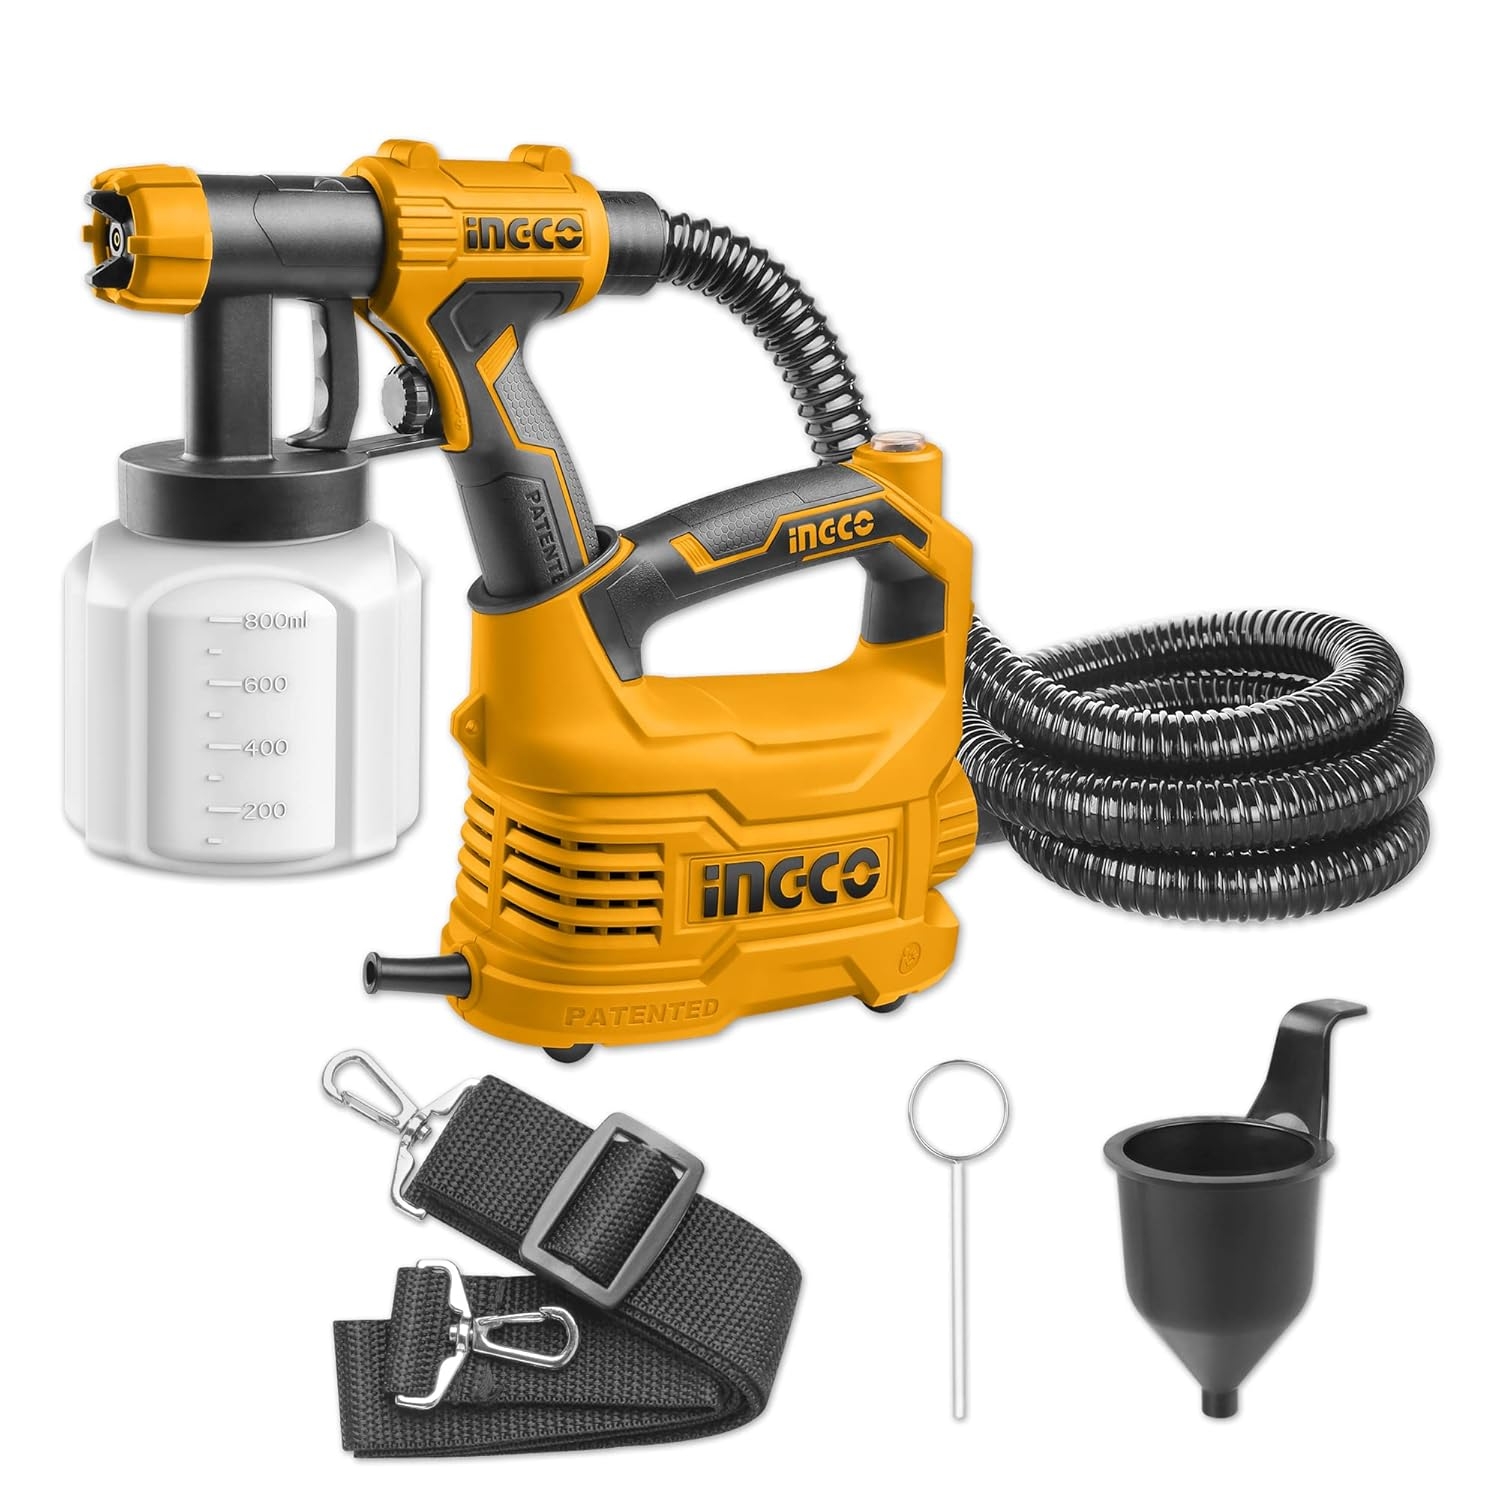 Ingco HVLP Floor Based Spray Gun, 800ml Paint Sprayer, 3 Spray Patterns | 500W | 50DIN-s, Electric Paint Spray Gun, Adjustable Valve Knob